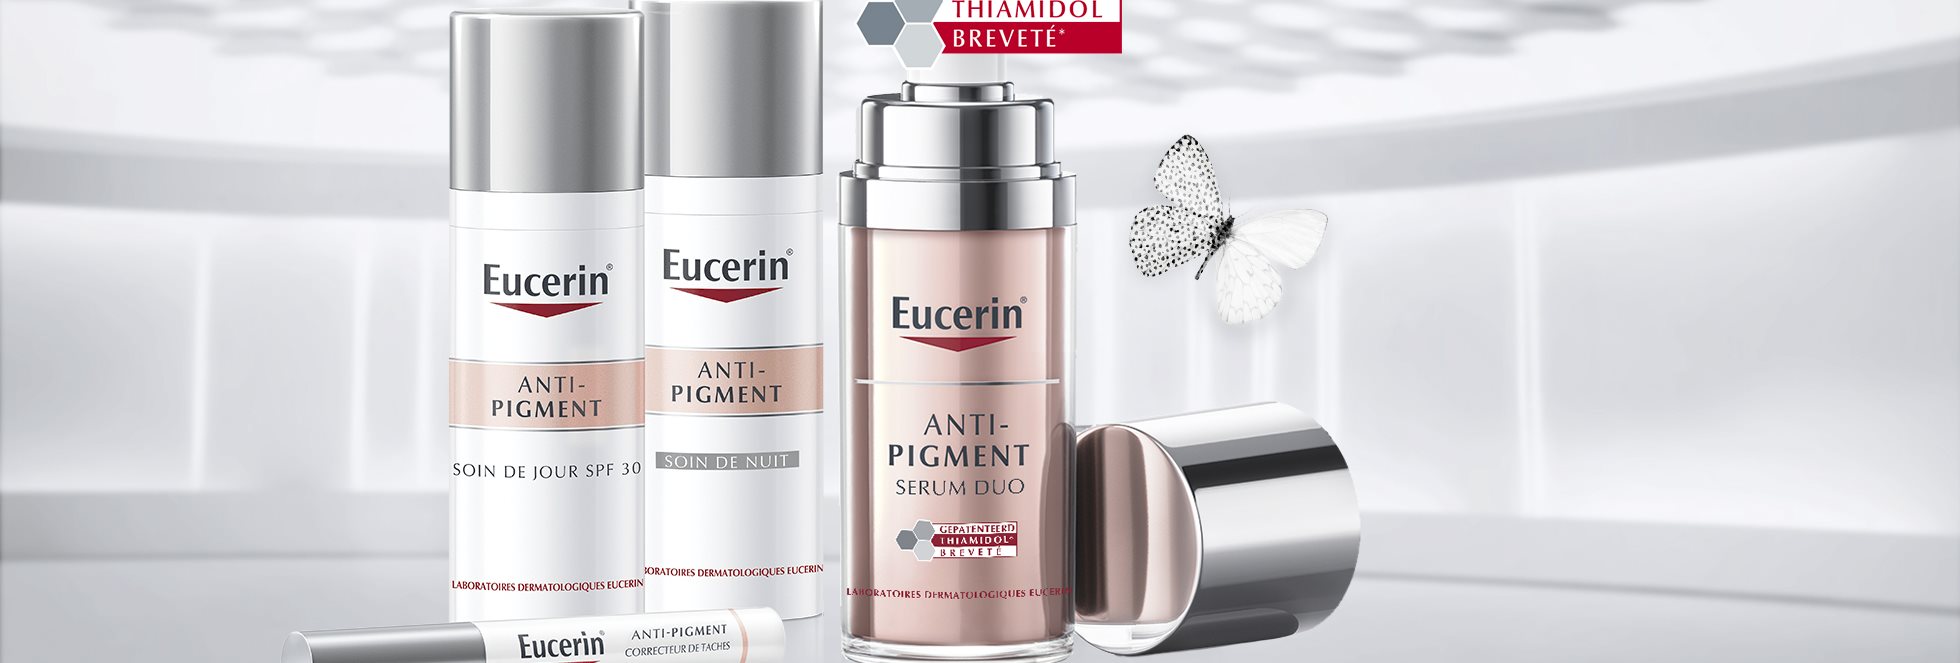 Les produits Eucerin Anti-Pigment